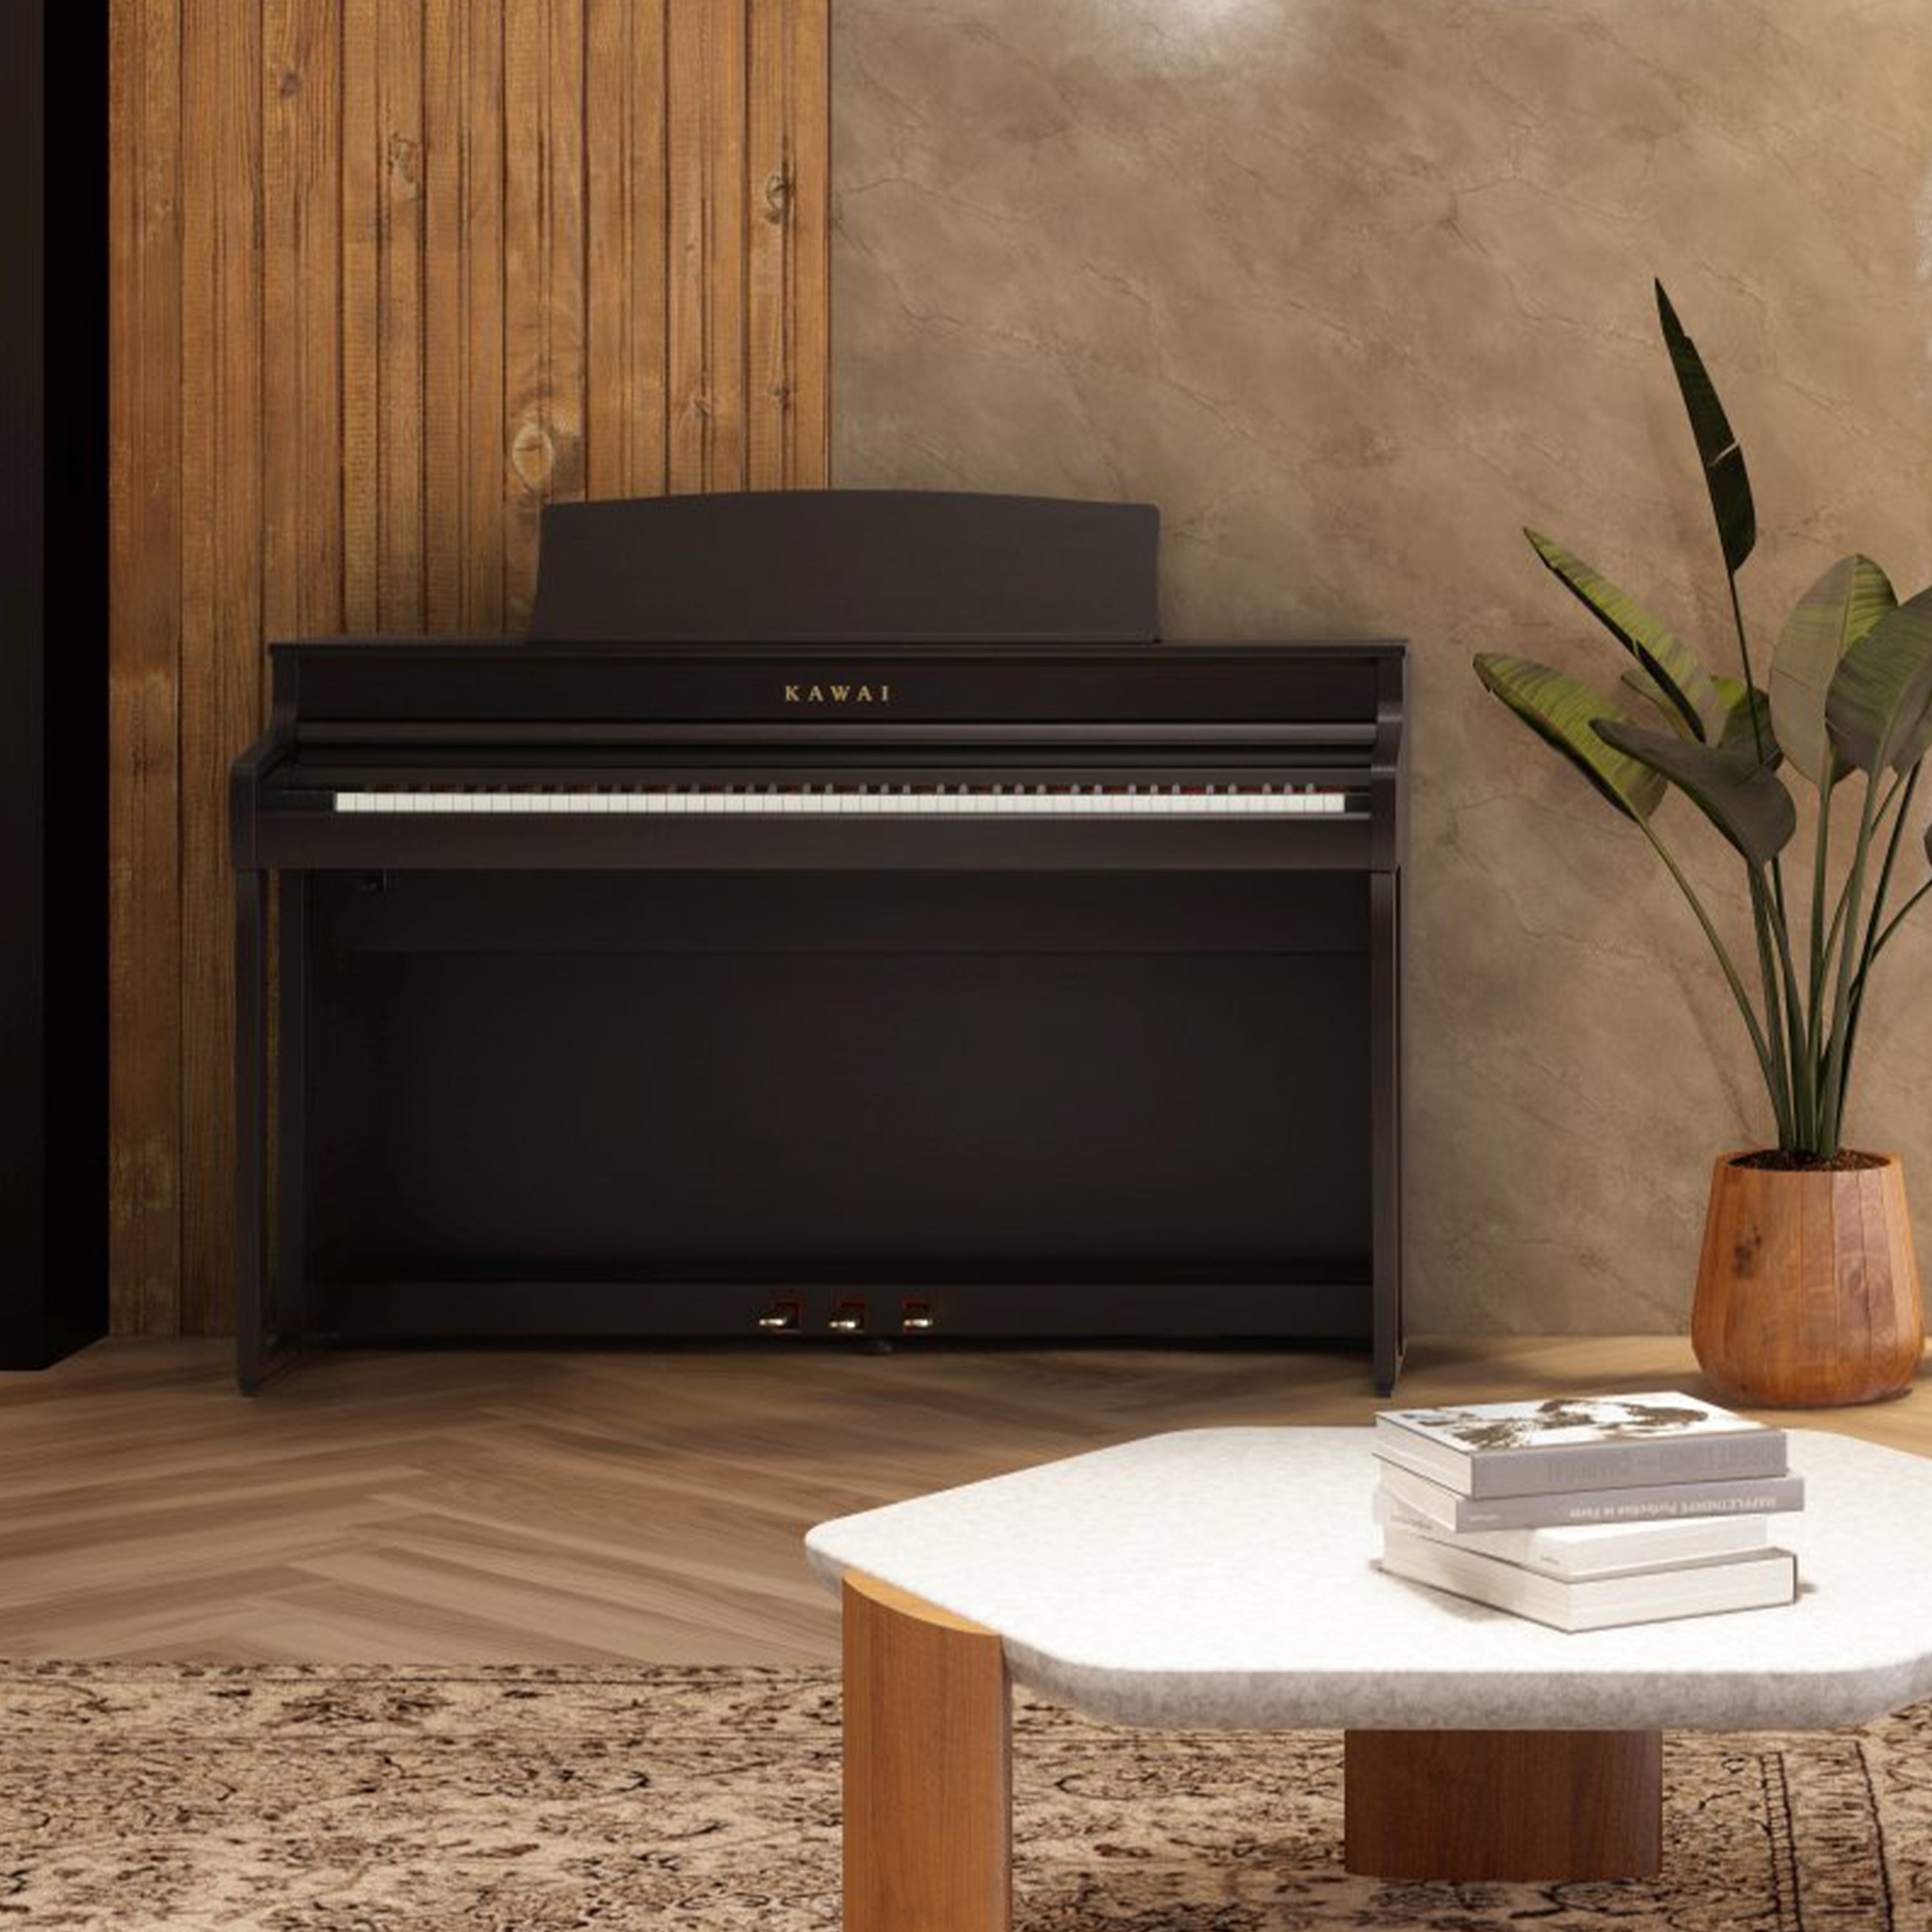 Kawai CA501 Concert Artist Digital Piano - Premium Rosewood - In a stylish living room